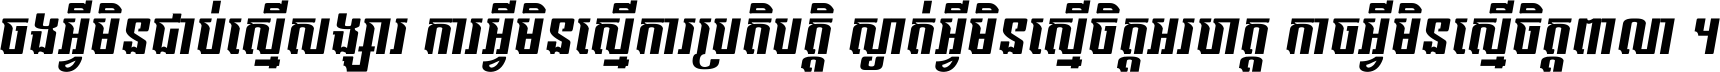 Kh Baphnom 018 PenRan Italic